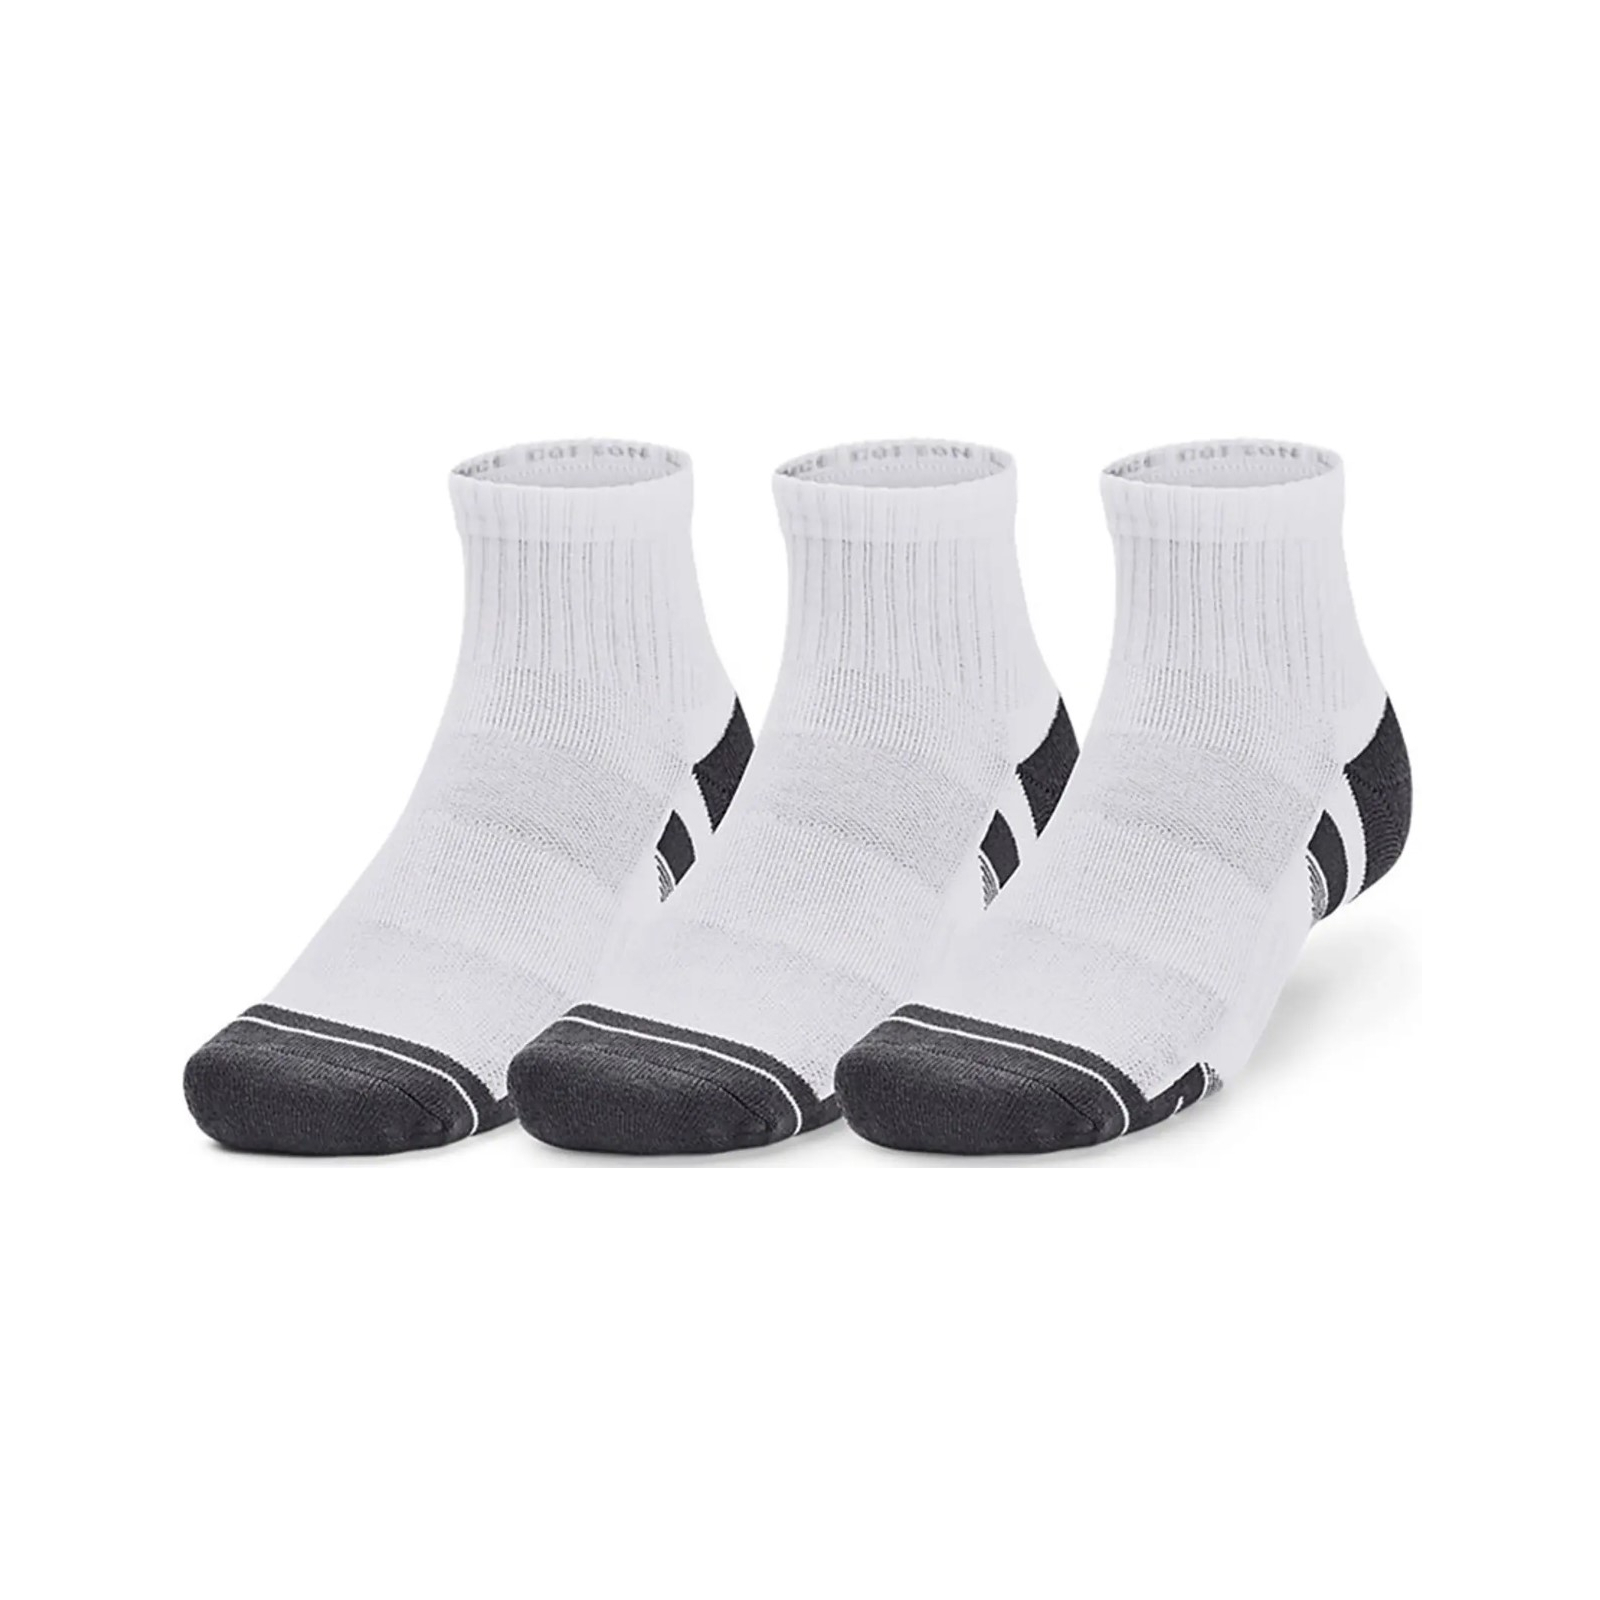 Шкарпетки Under Armour 1379528-100 Performance Cotton 3 пари Qtr білий MD (196883995233)